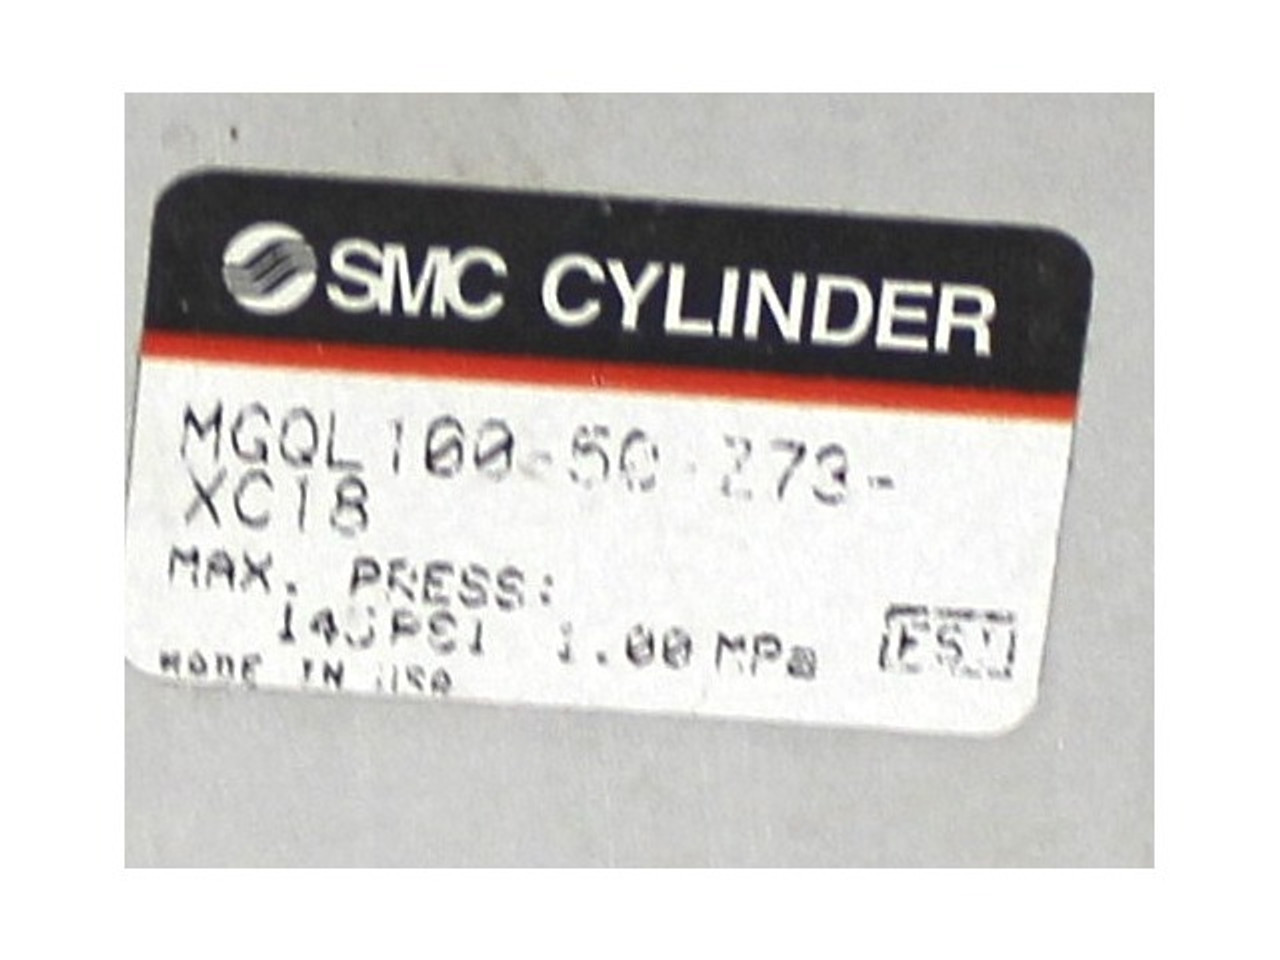 SMC 8 Cylinder Slide Bearing, MGQL100-50-Z73L-XC18, 140 PSI, 1.0 MPa